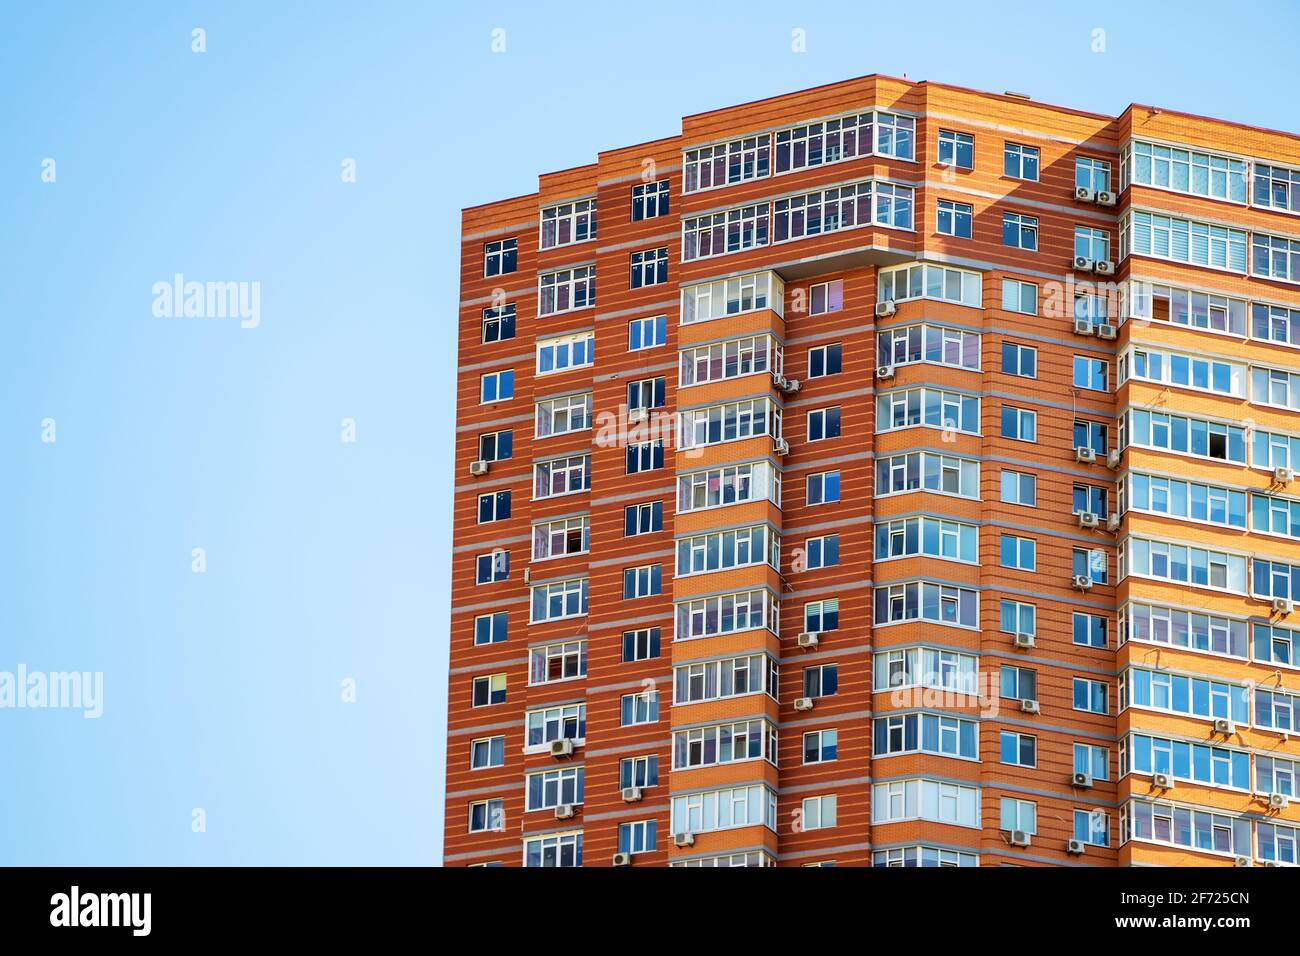 Brick building with windows on sky background. Stock Photo